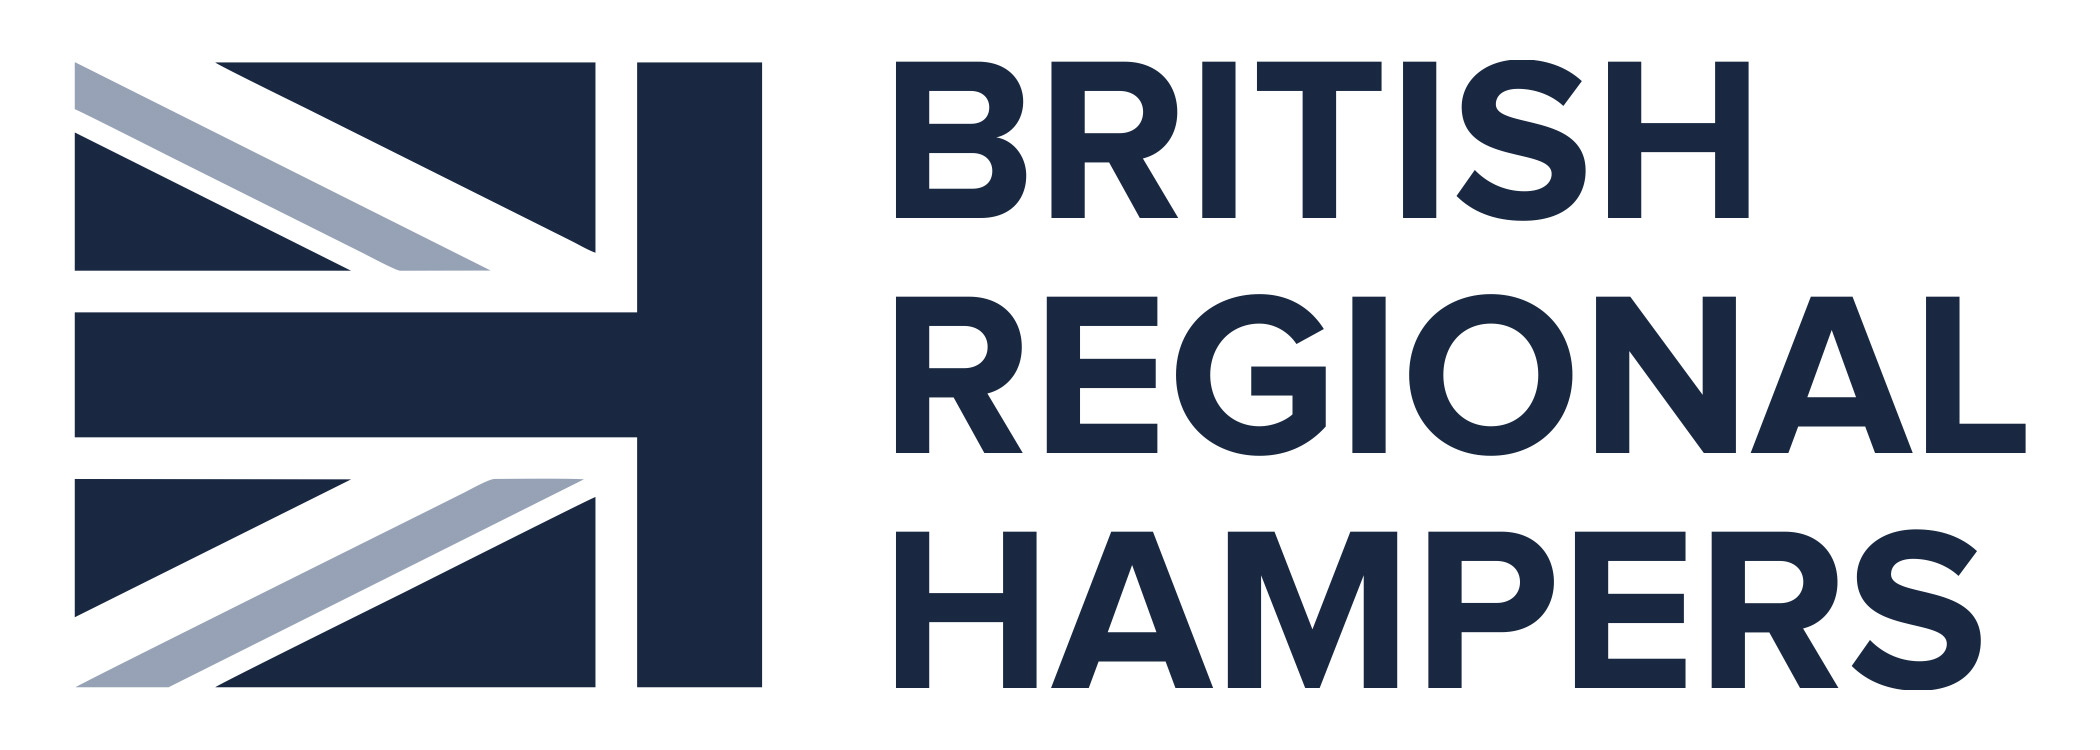 British Regional Hampers Logo RGB JPEG.jpg